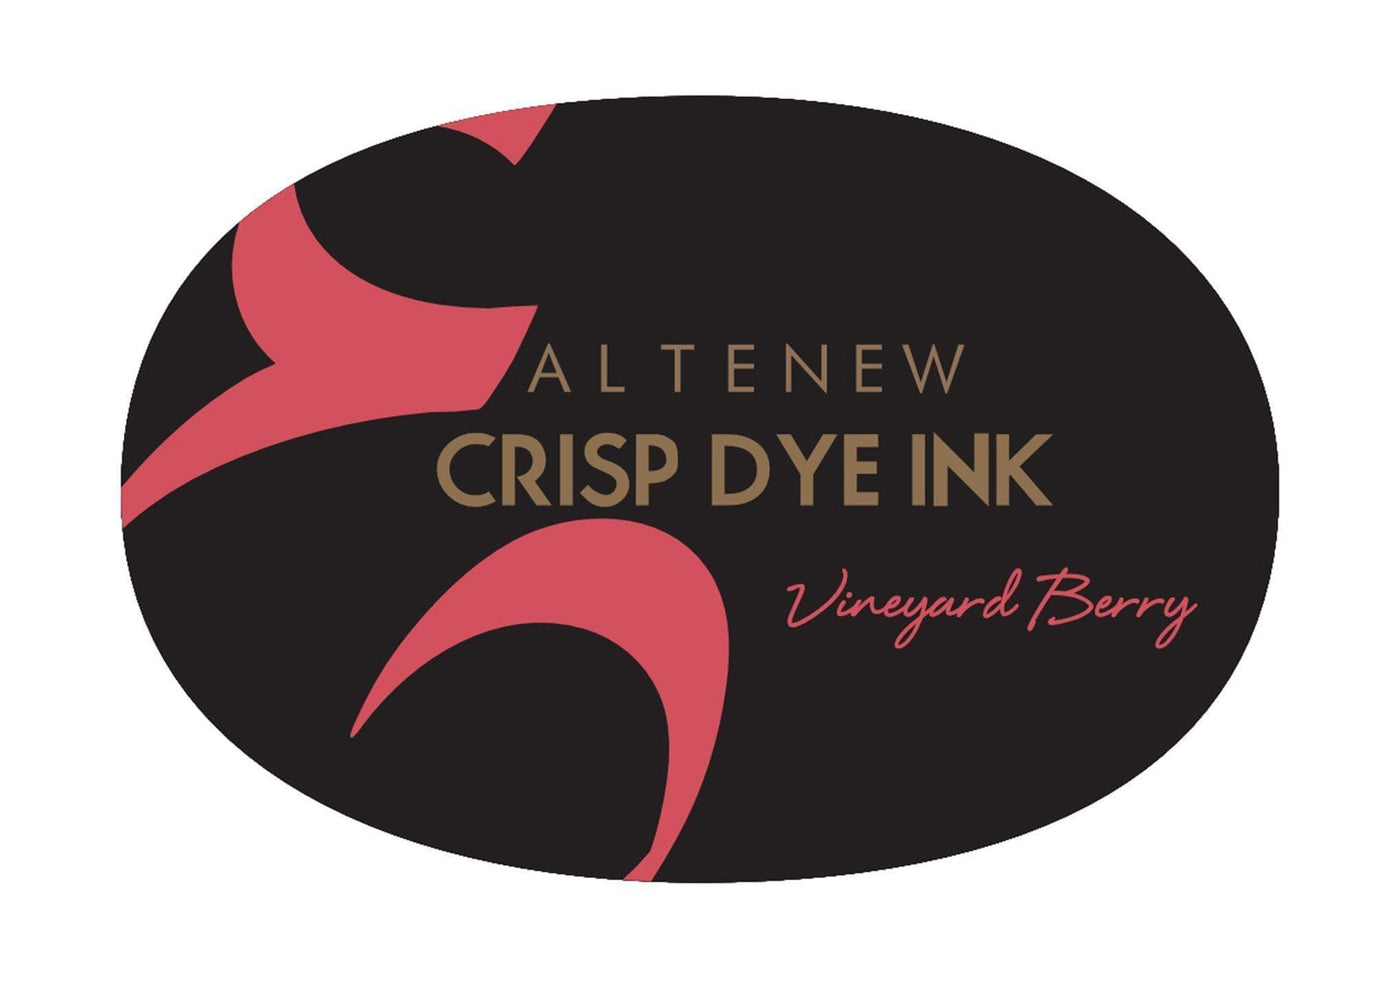 Stewart Superior Inks Vineyard Berry Crisp Dye Ink